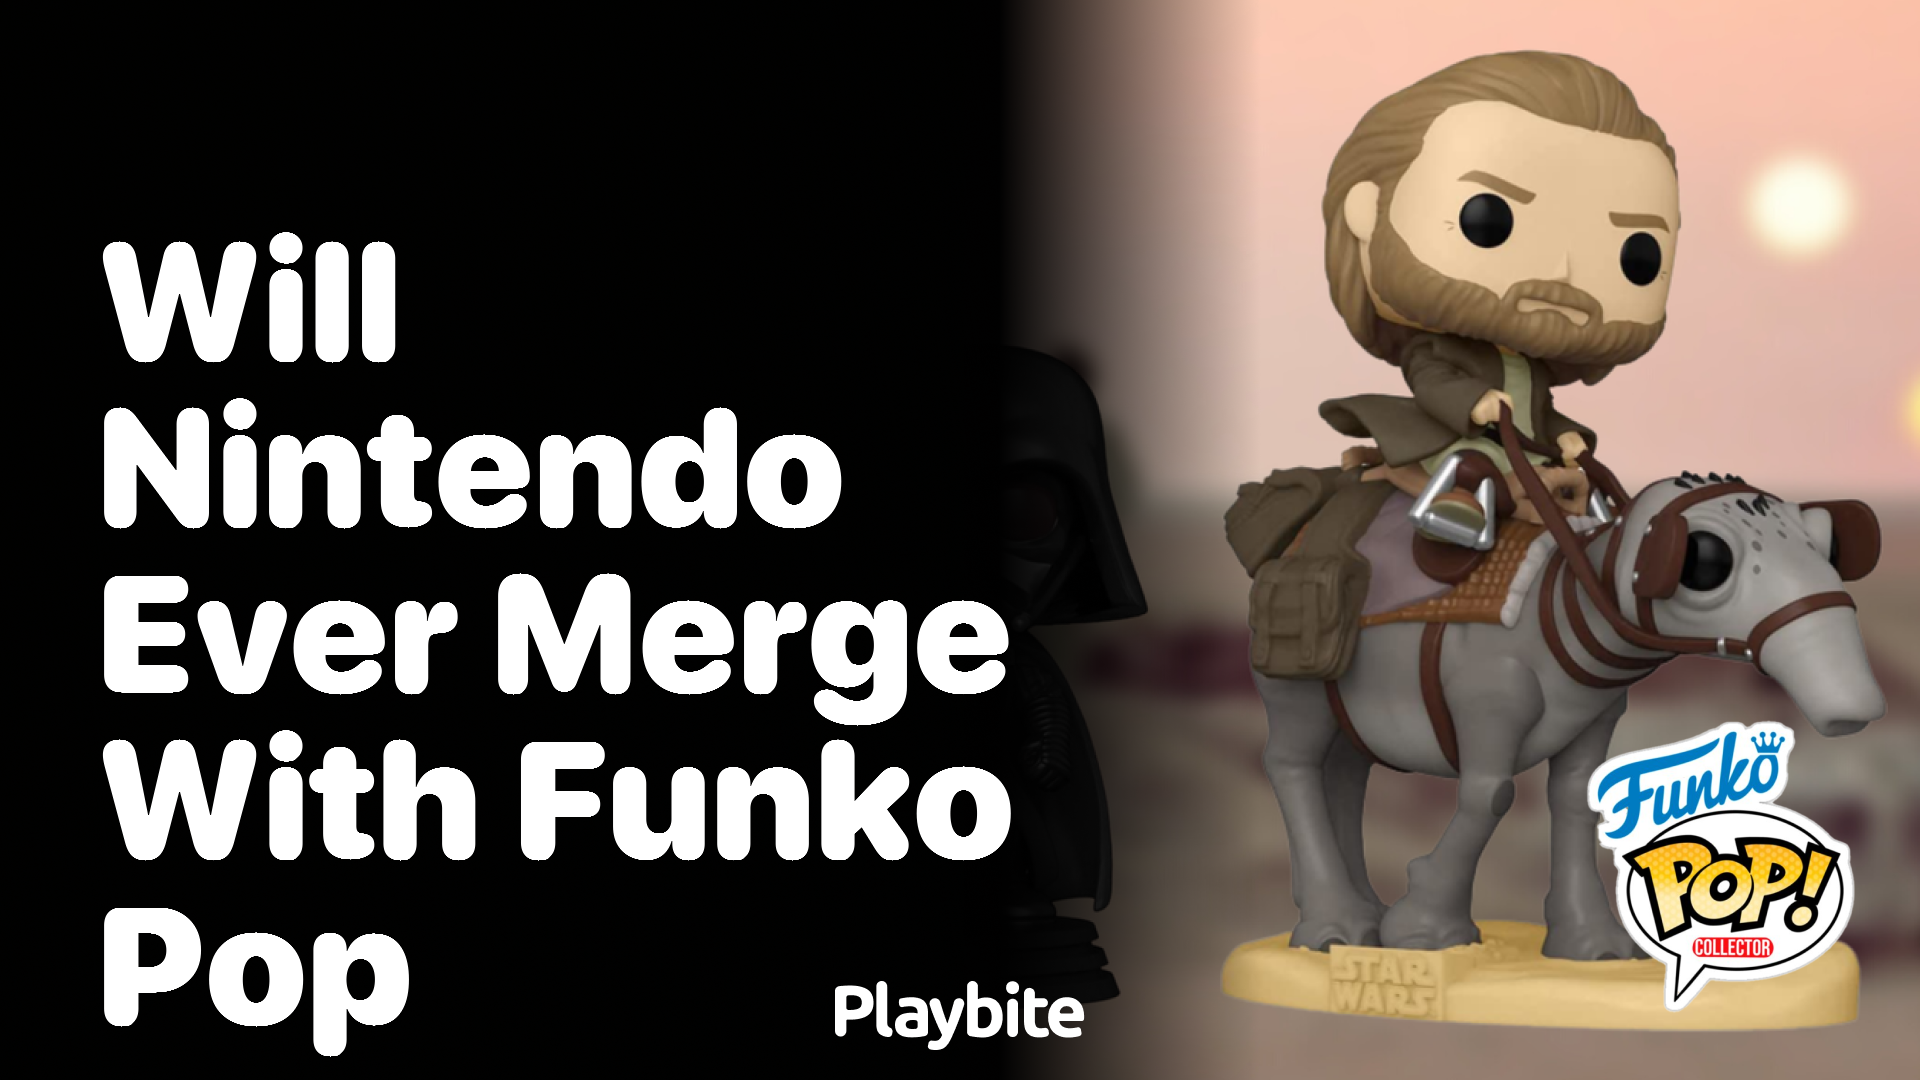 Will Nintendo ever merge with Funko Pop?